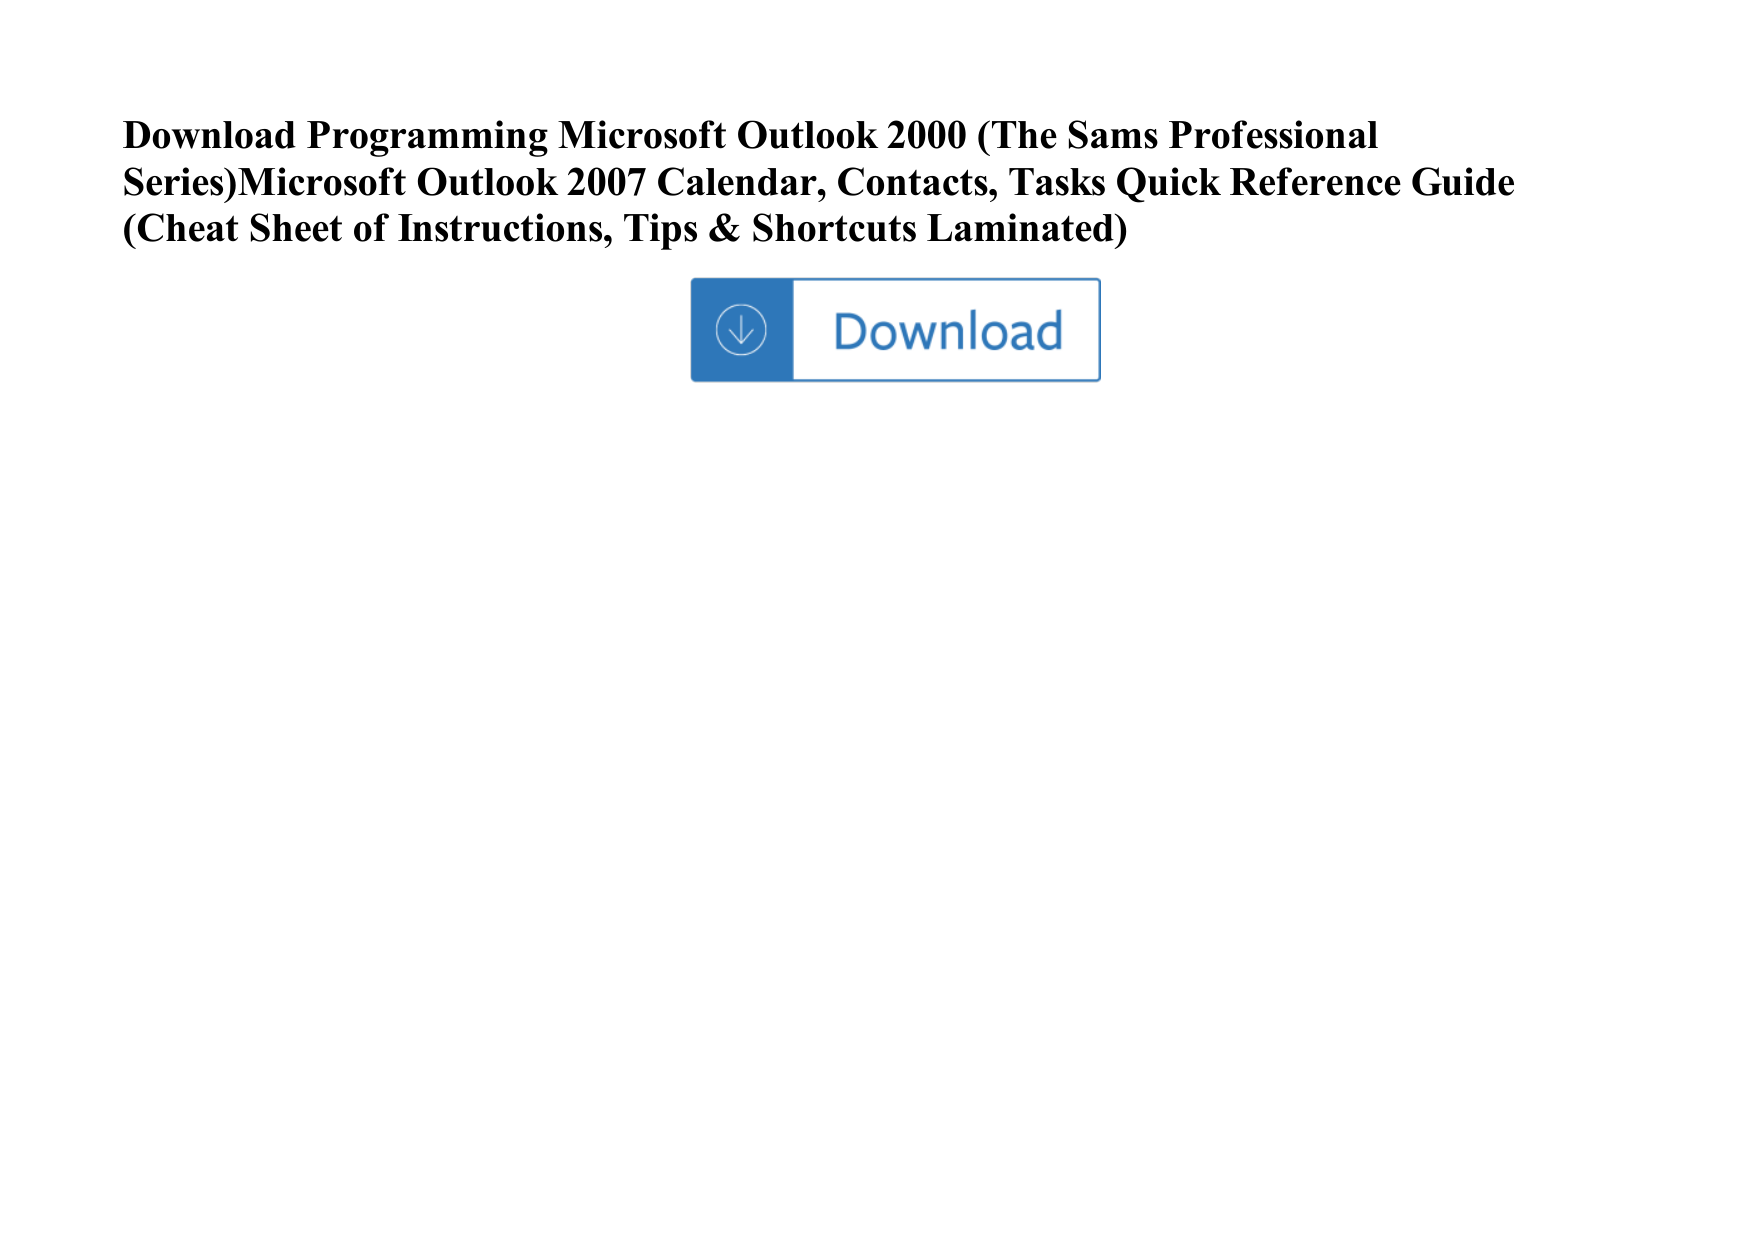 Programming Microsoft Outlook 2000 (The Sams Professional Series